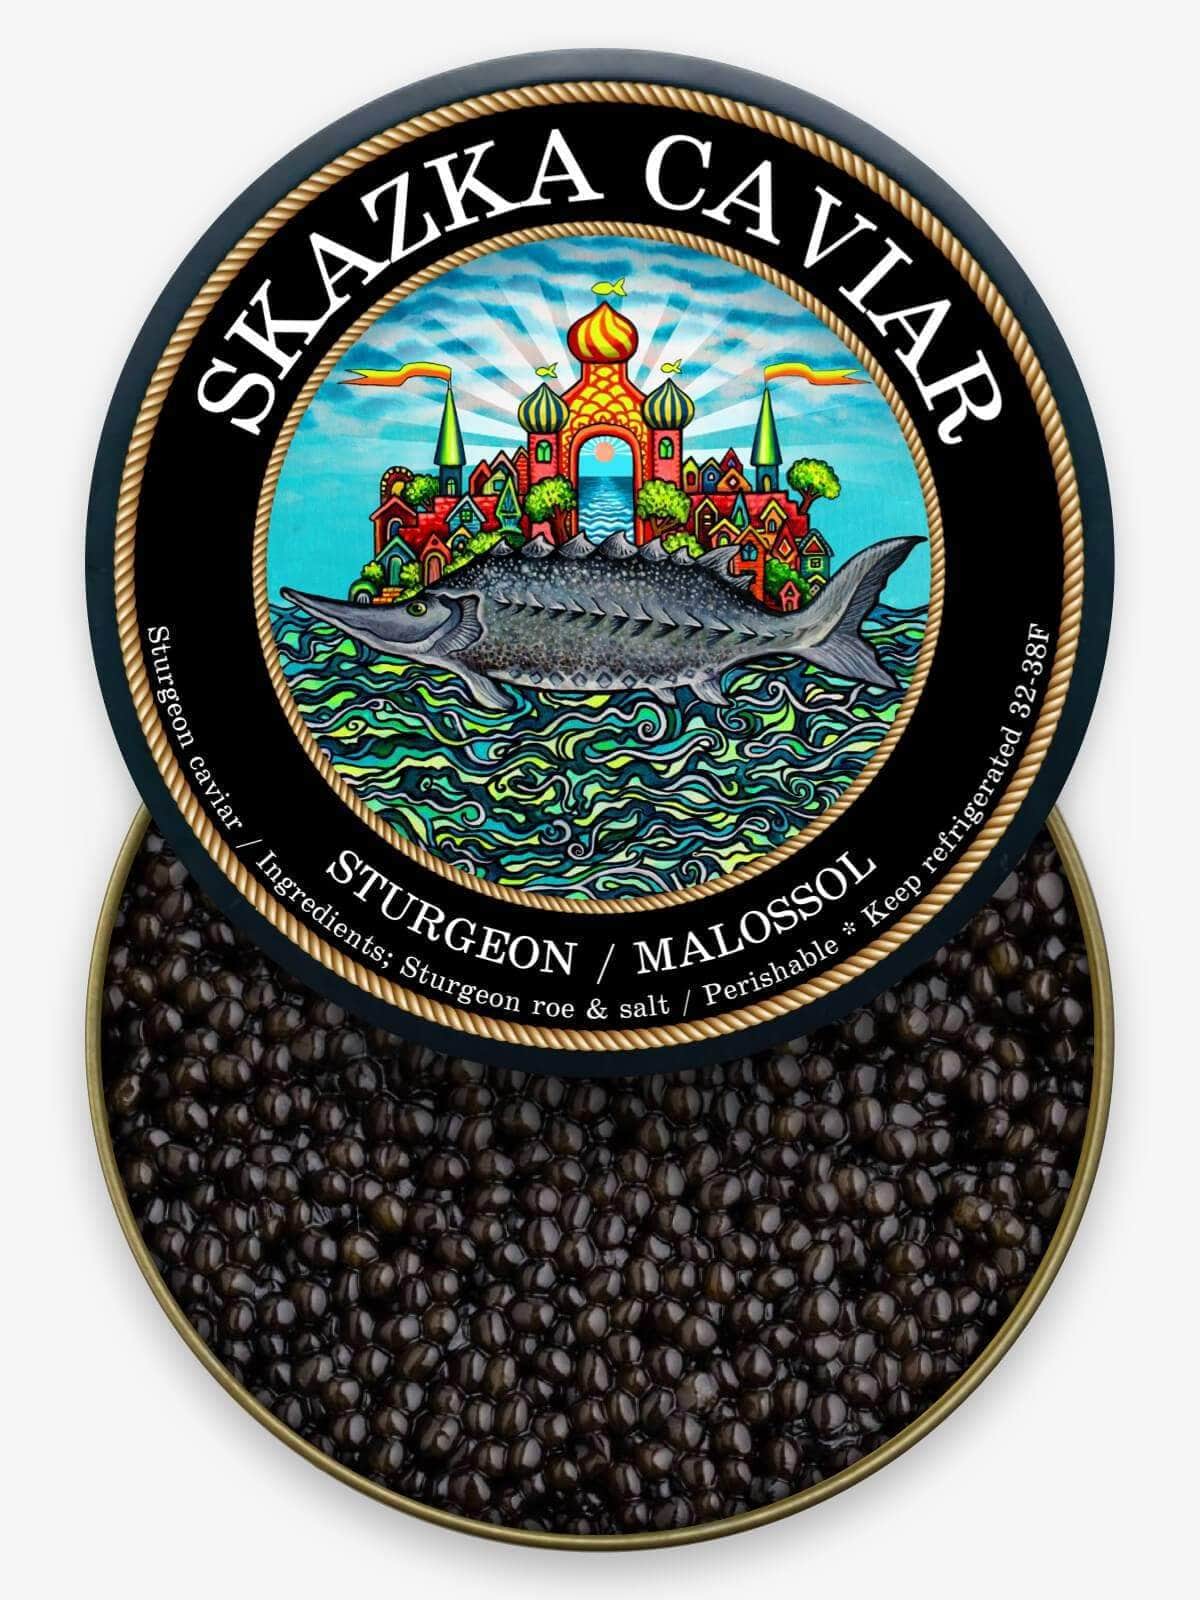 "Russian Czar" Beluga Sturgeon Caviar - Caviar Skazka